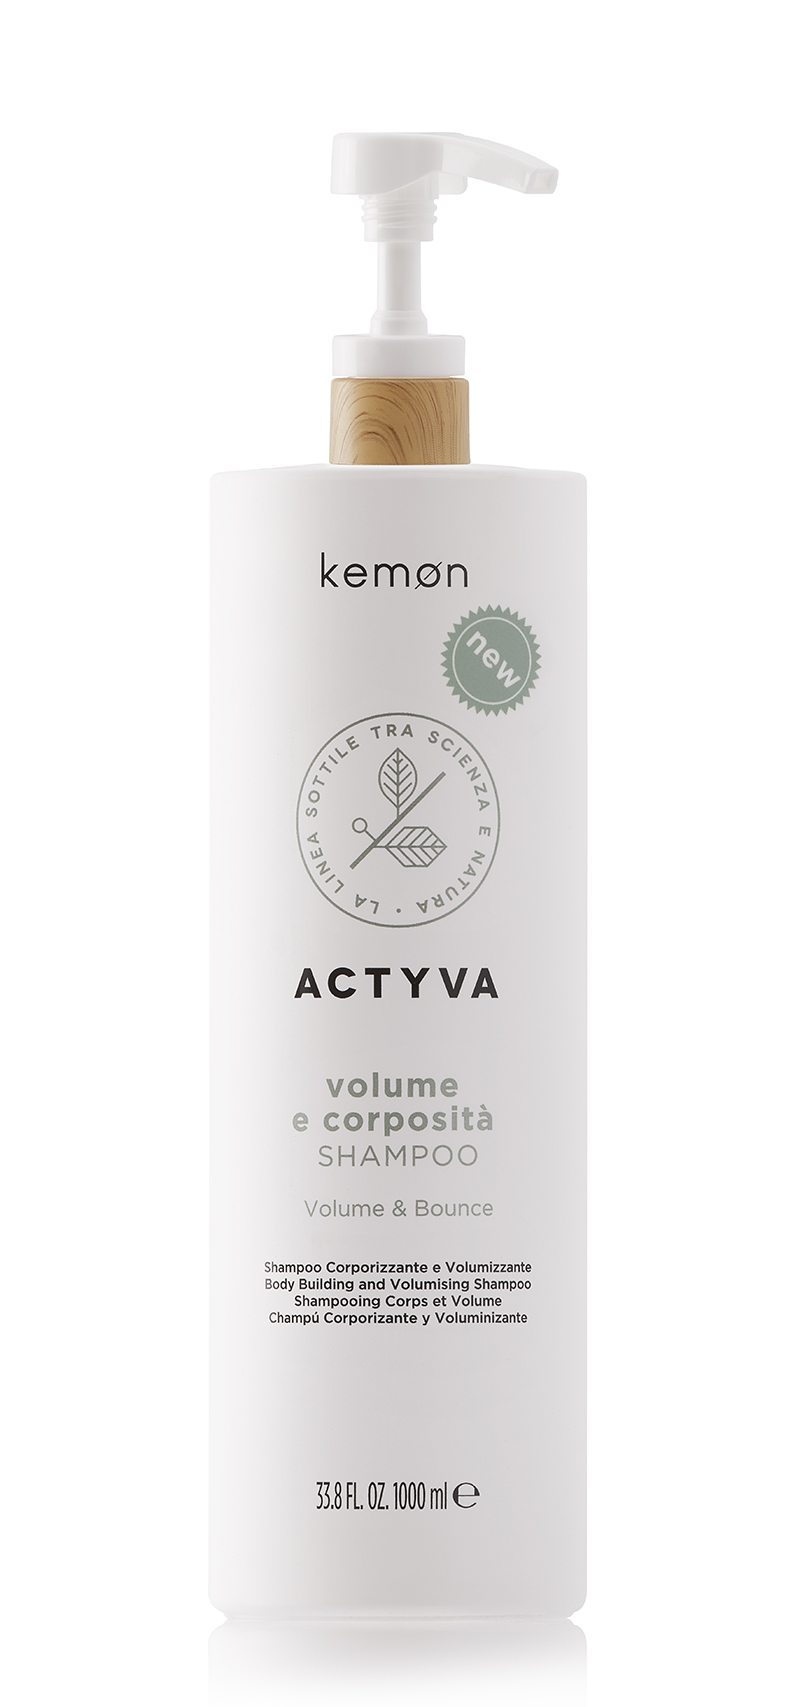 actyva szampon volume e corposita shampoo